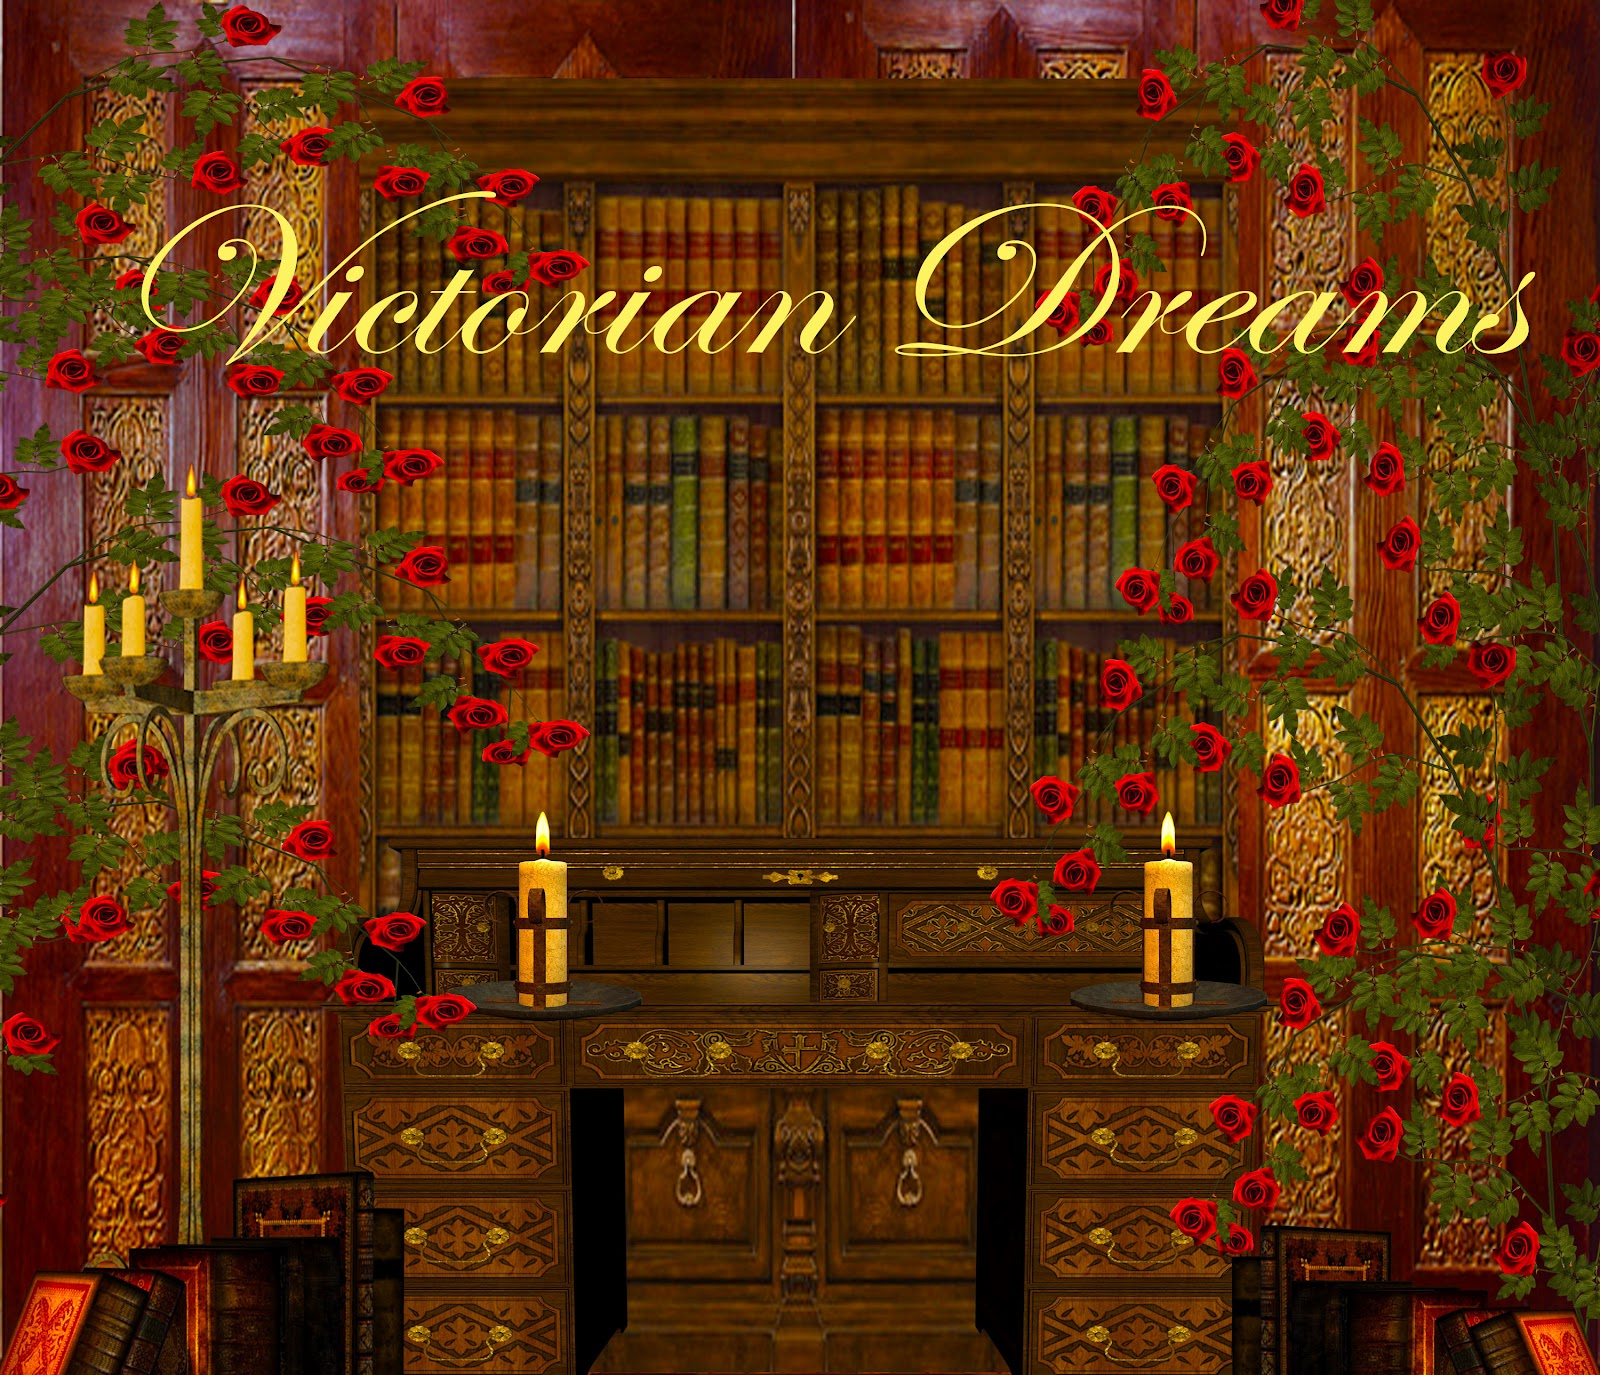 Victorian Dreams by Kayshalady